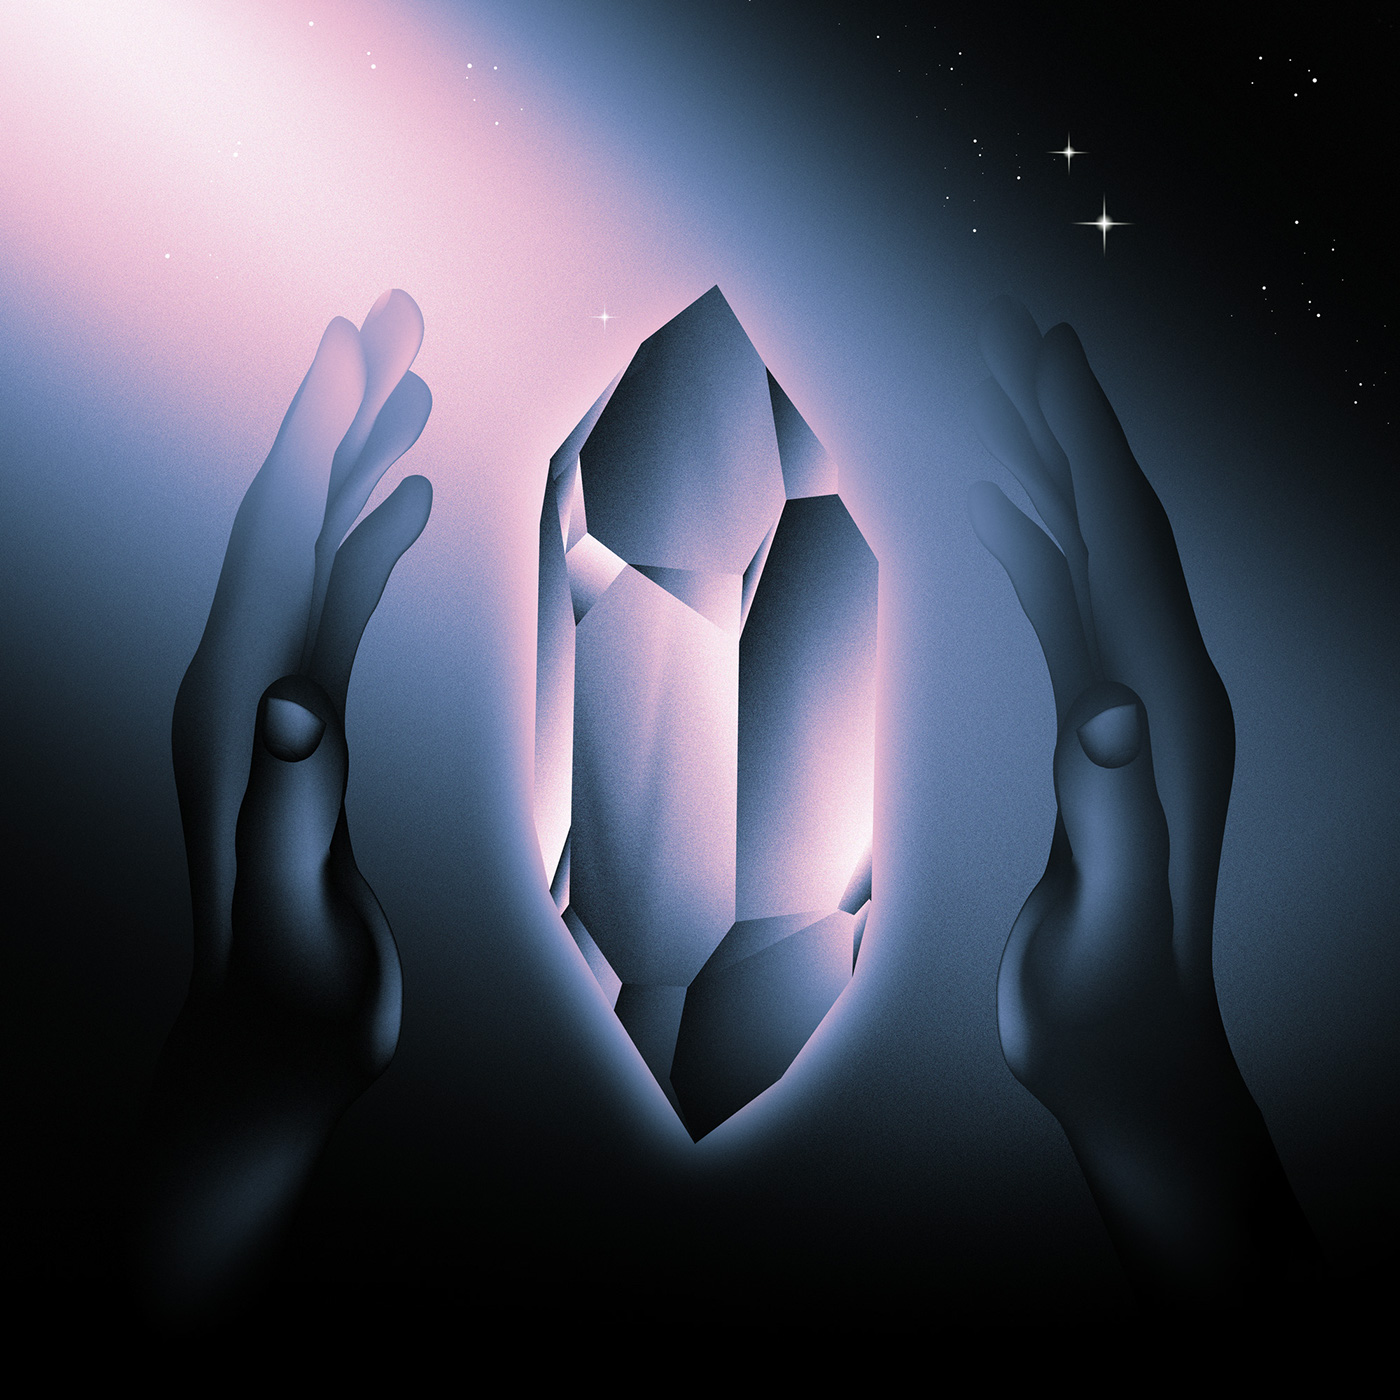 artwork music electronic album cover SF Retro cosmic airbrush crystal 80's